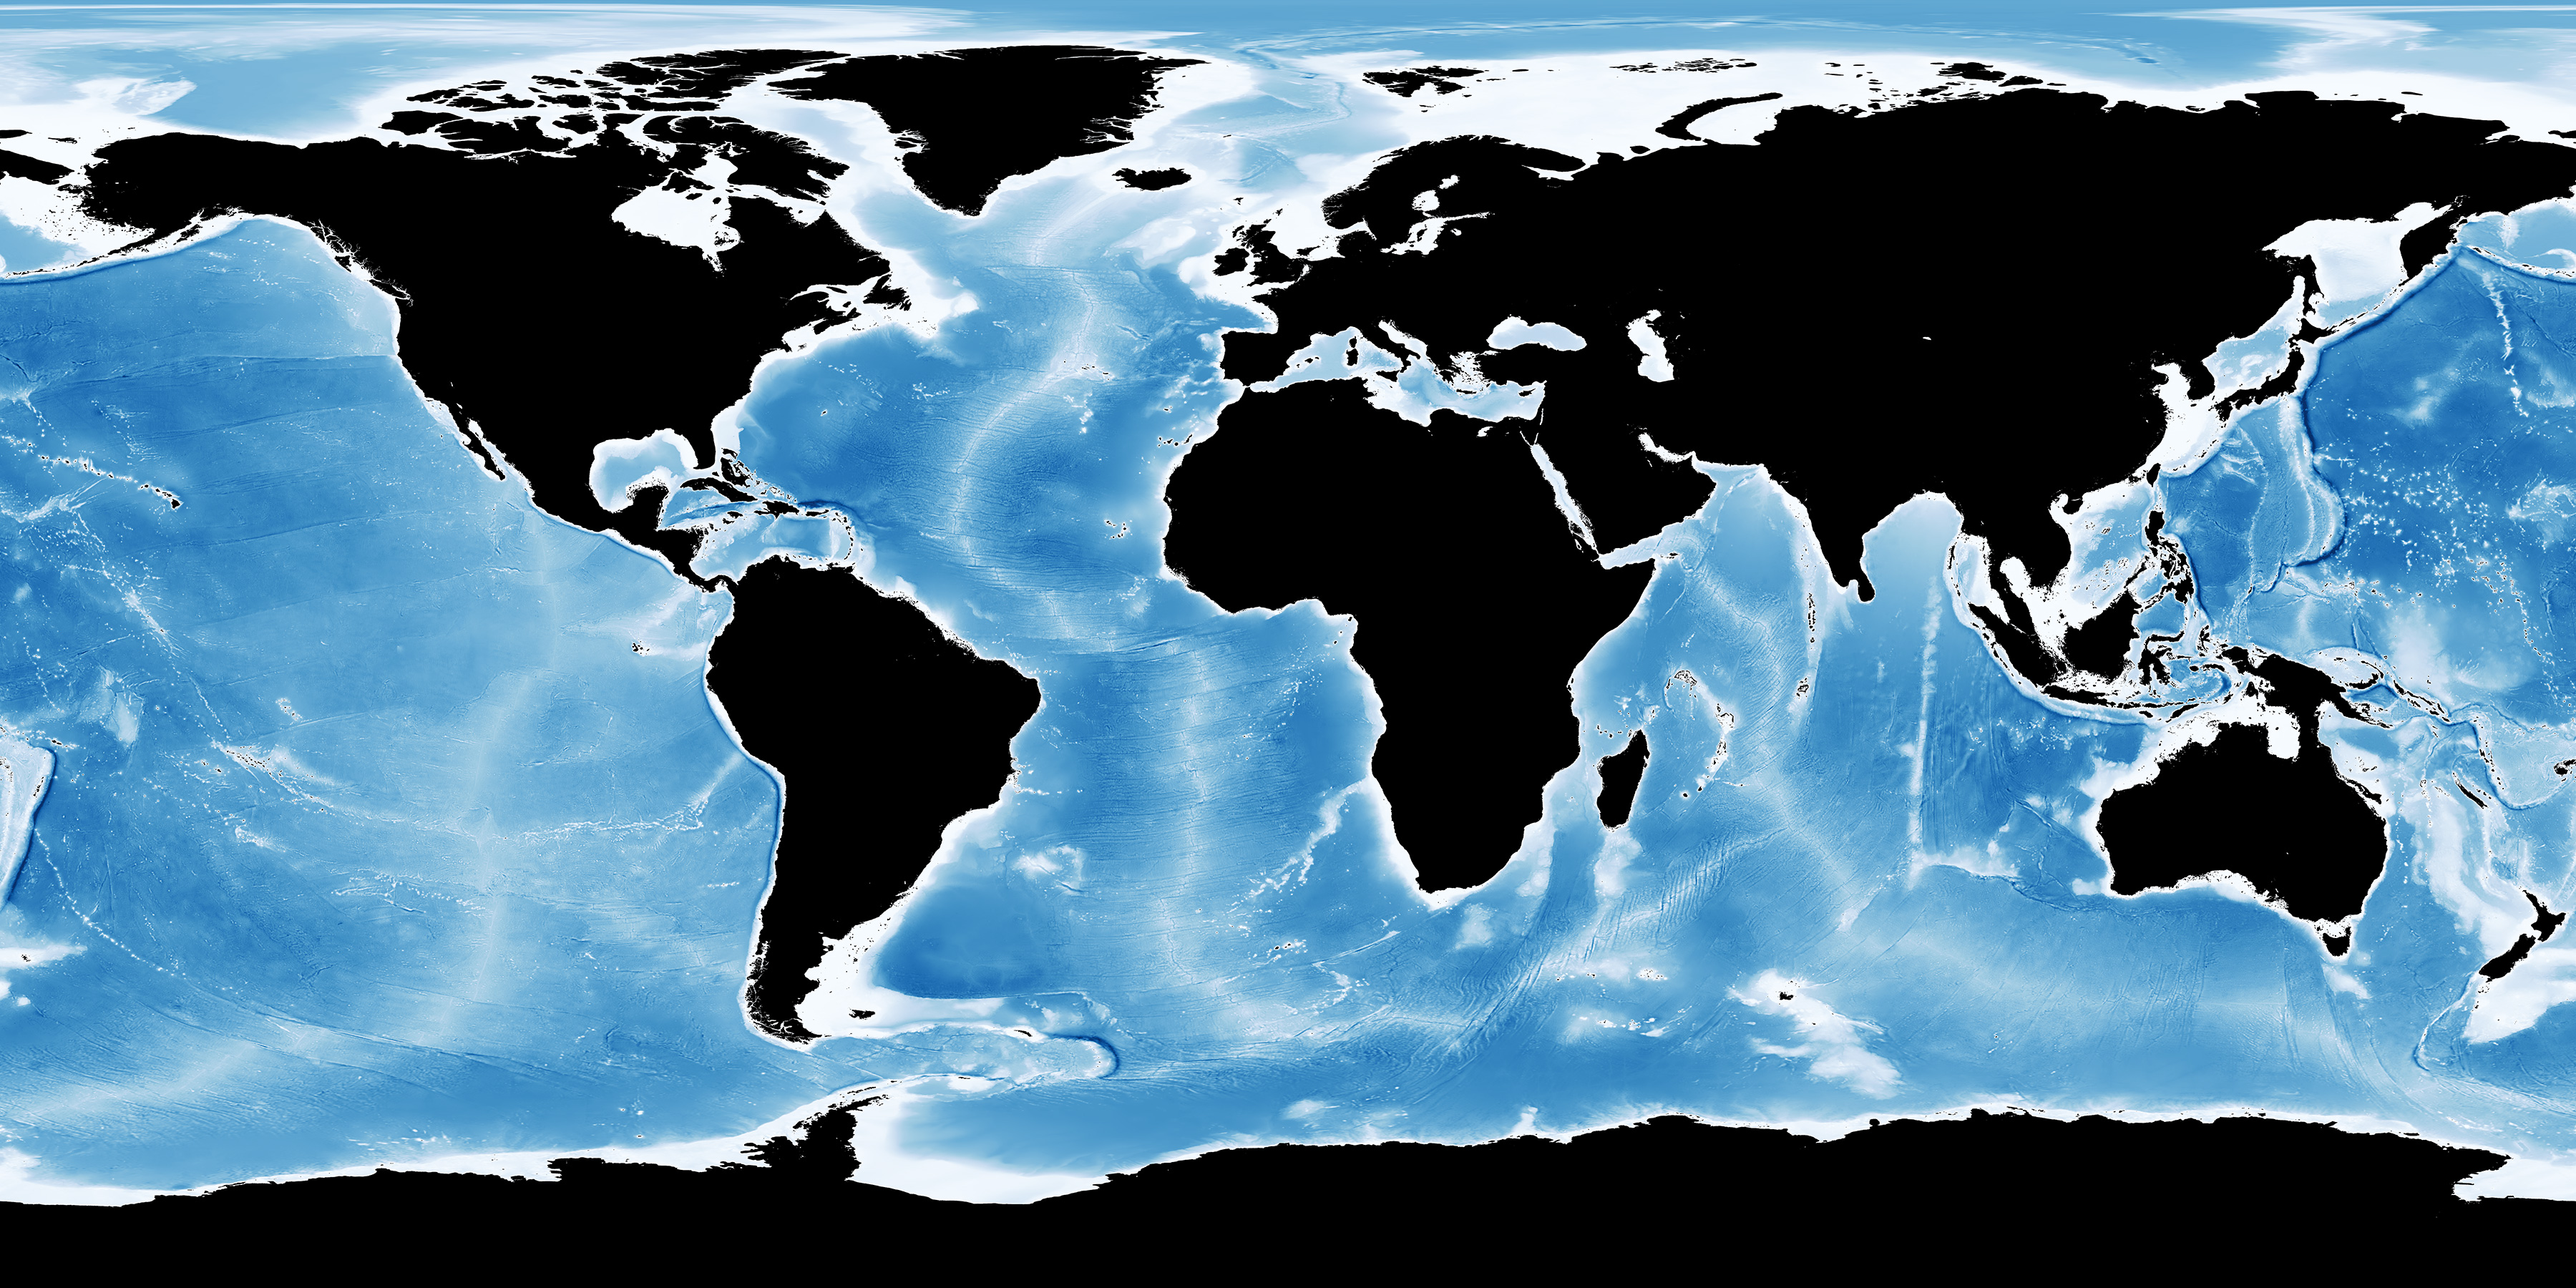 Map showing global ocean water depth.